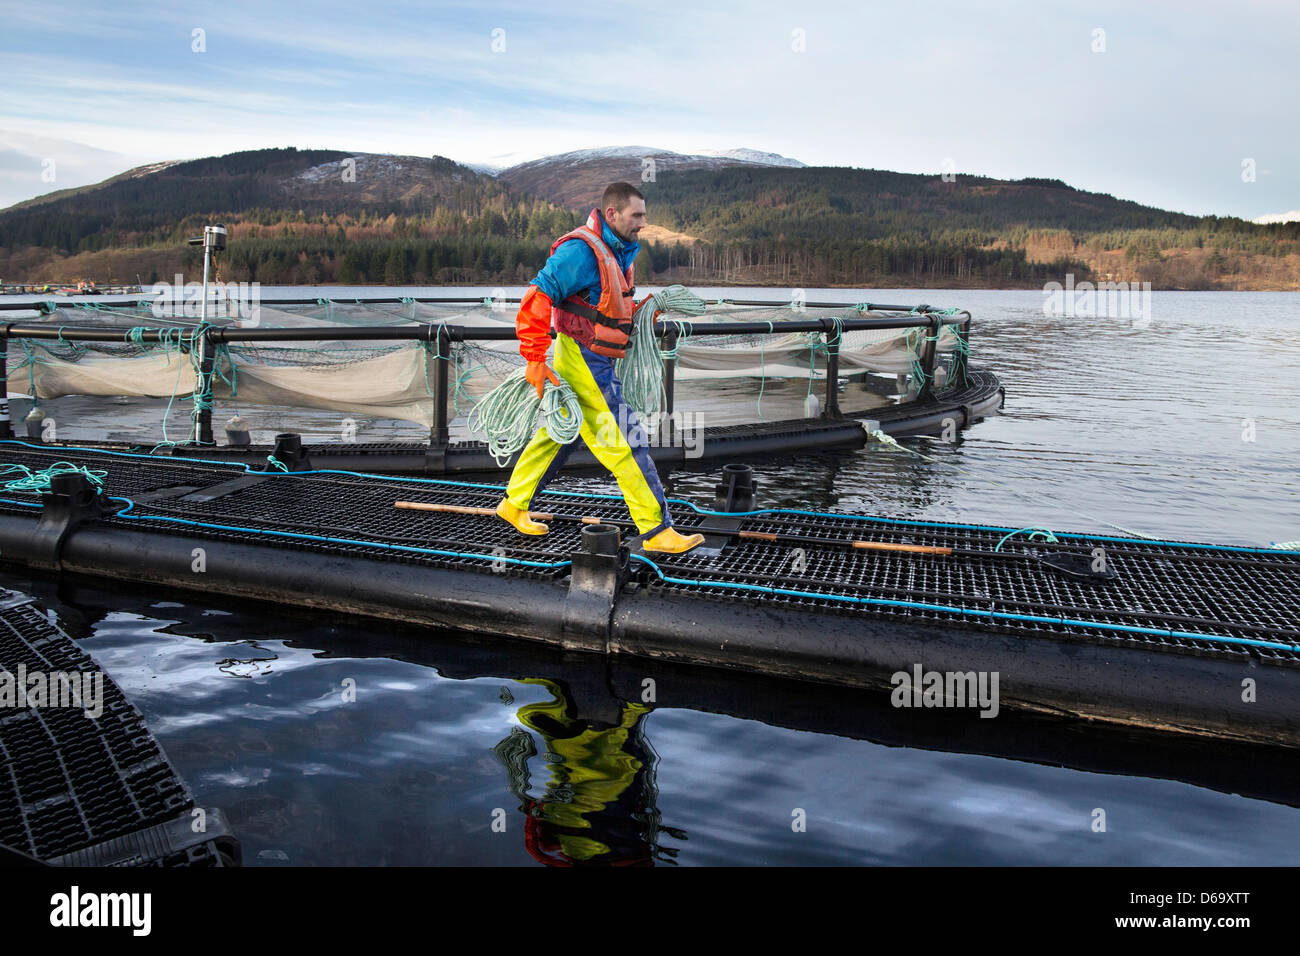 Worker on salmon farm in rural lake Stock Photo